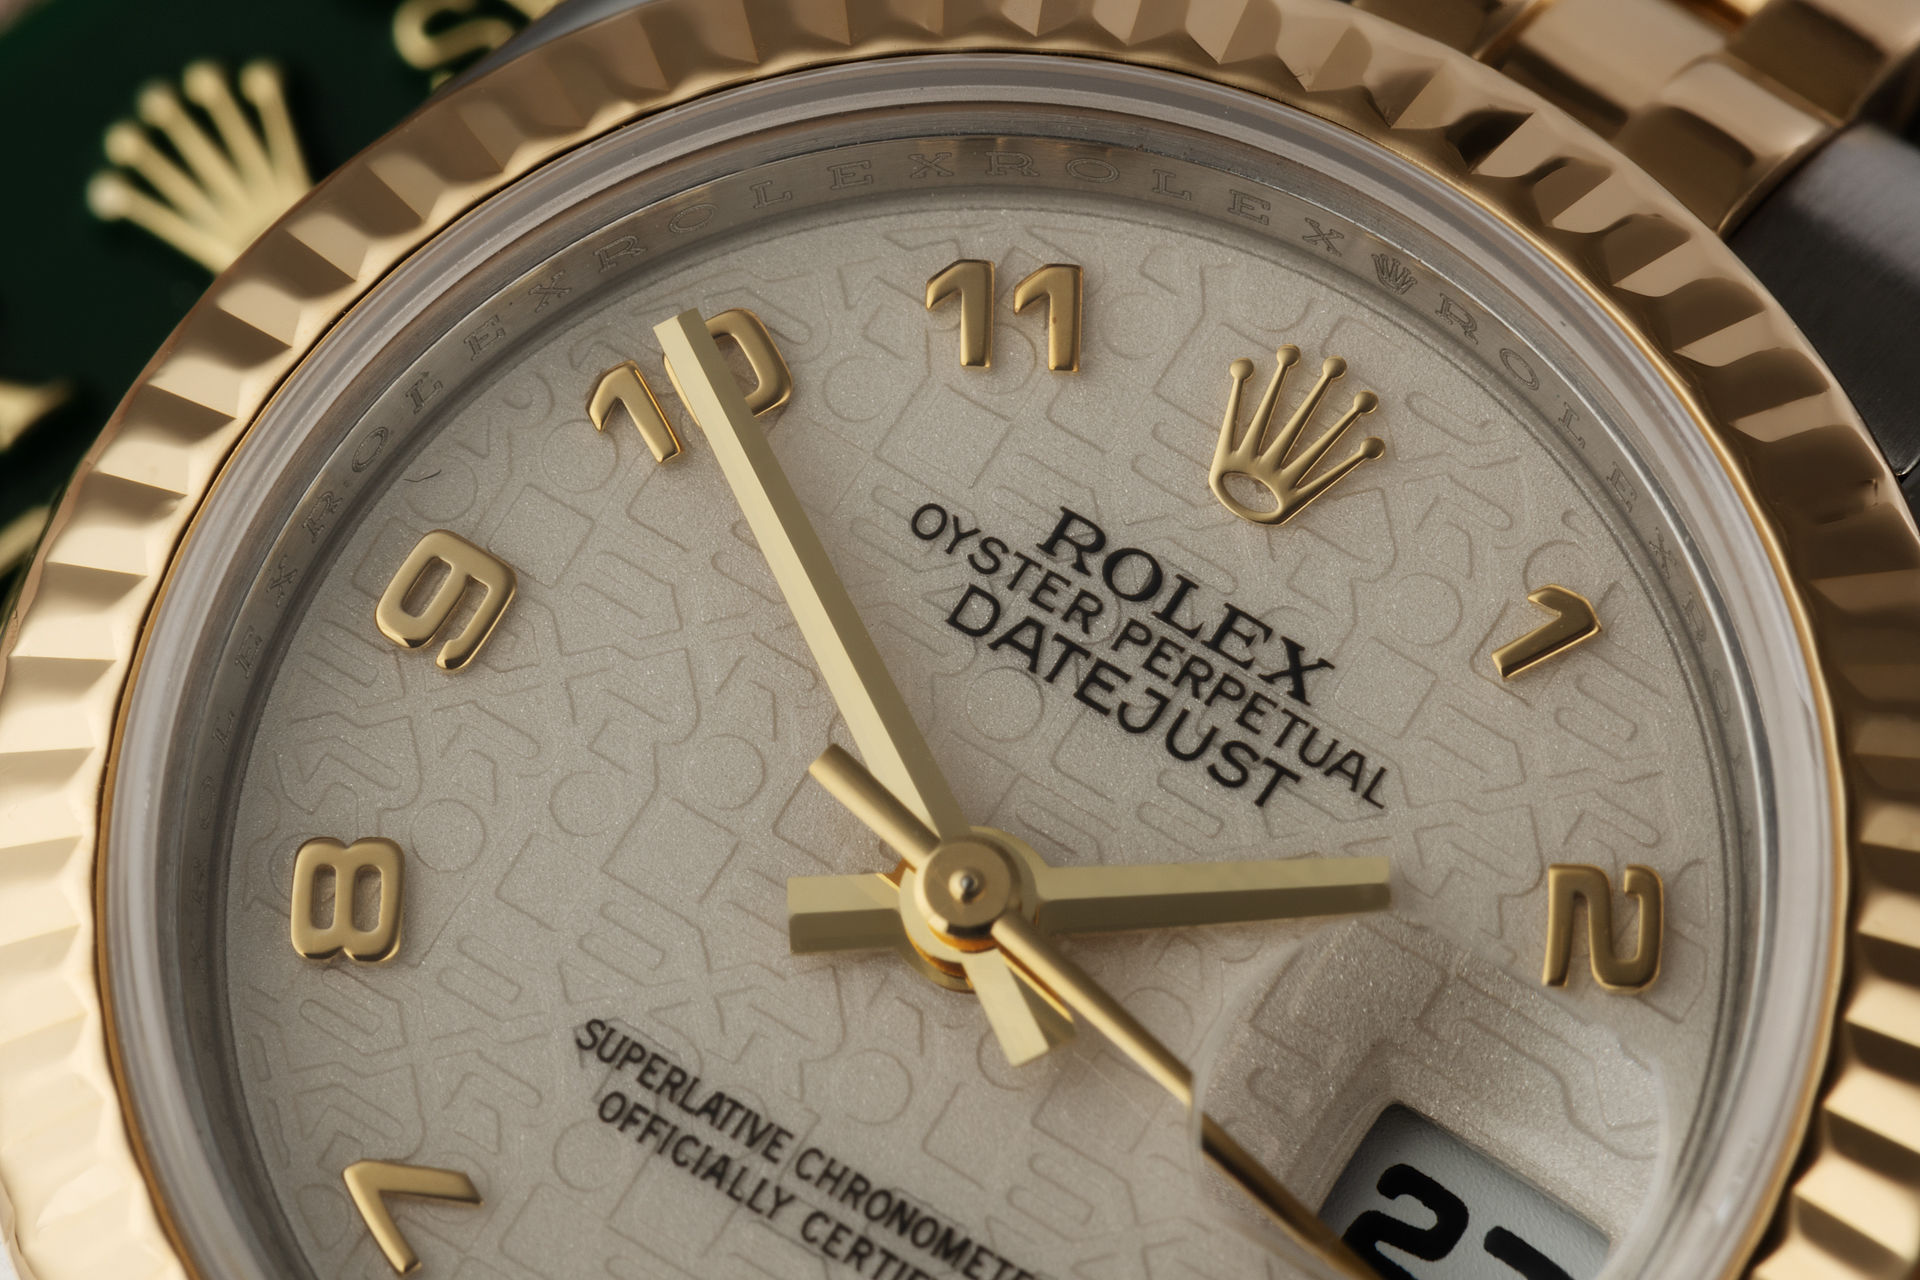 18ct Gold & Steel | ref 179173 | Rolex Lady-Datejust